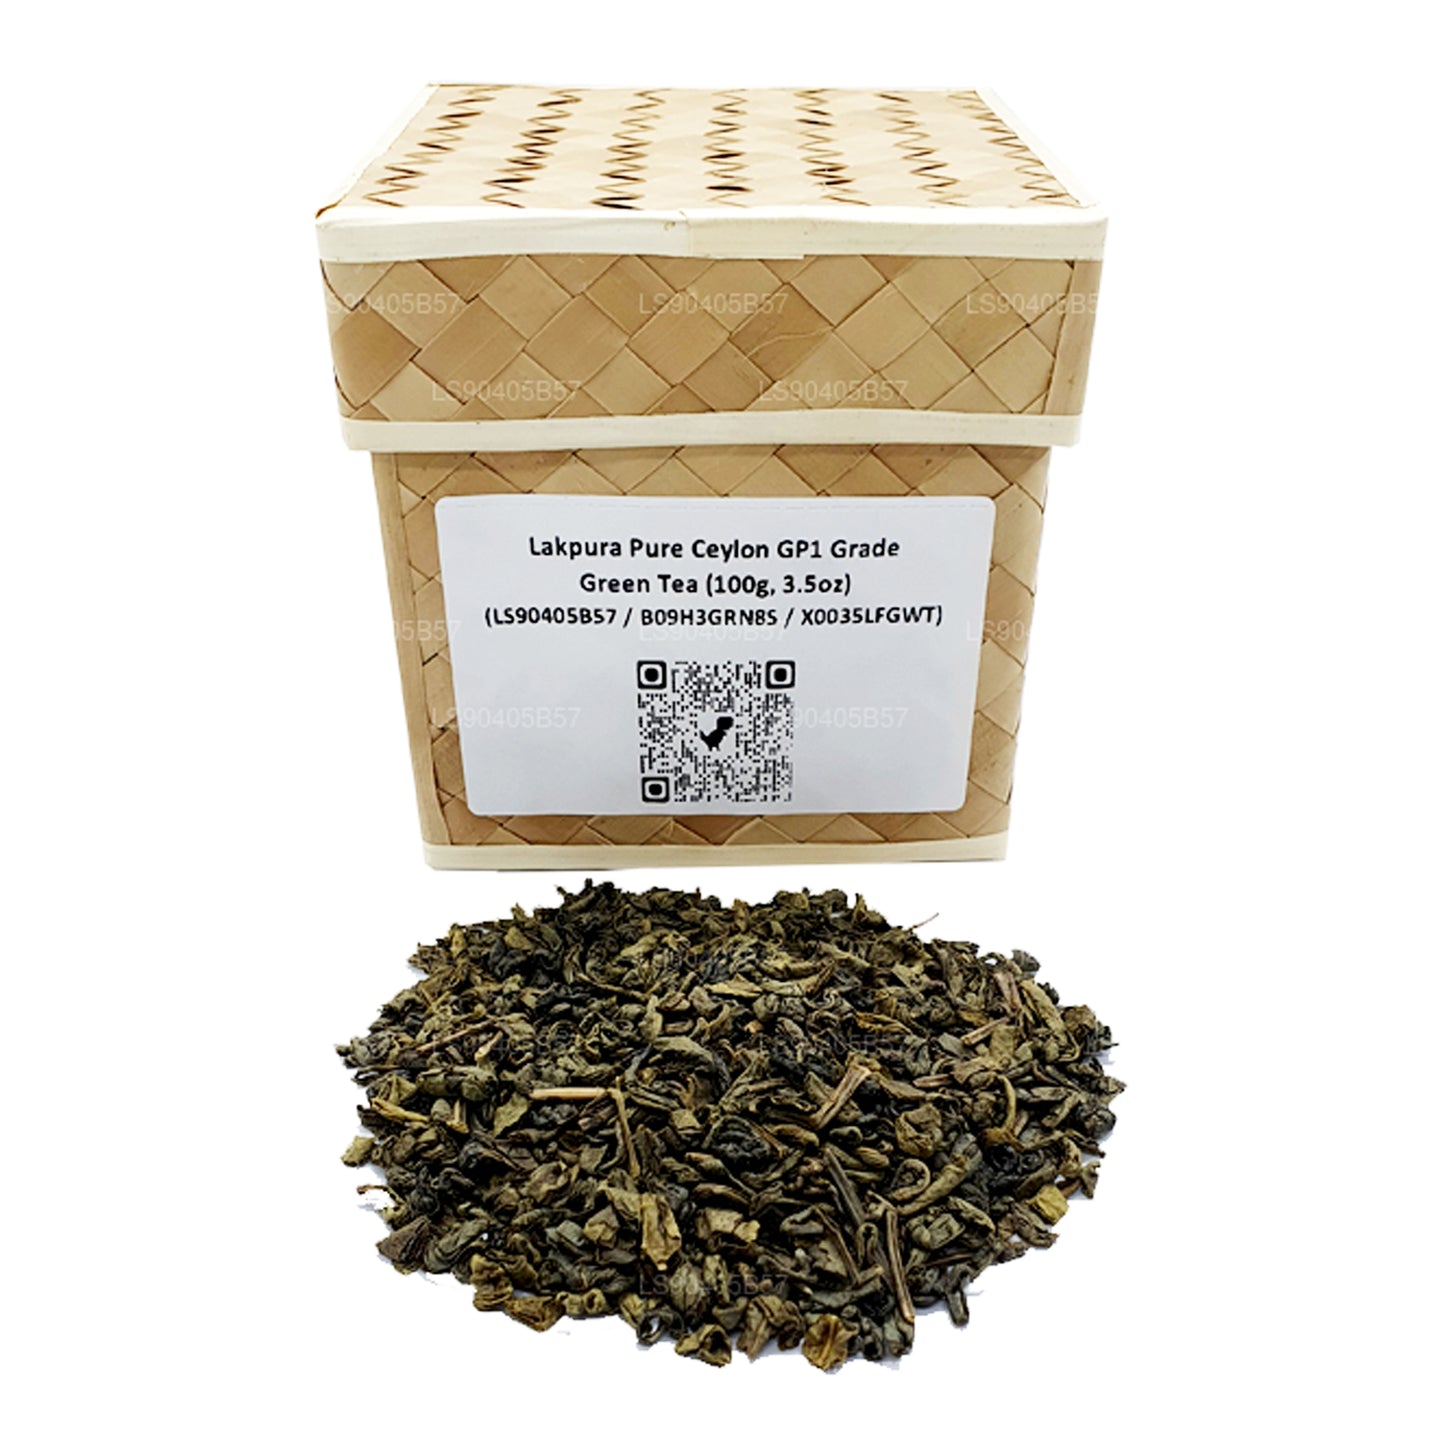 Lakpura Pure Ceylon GP1 Grade Green Tea